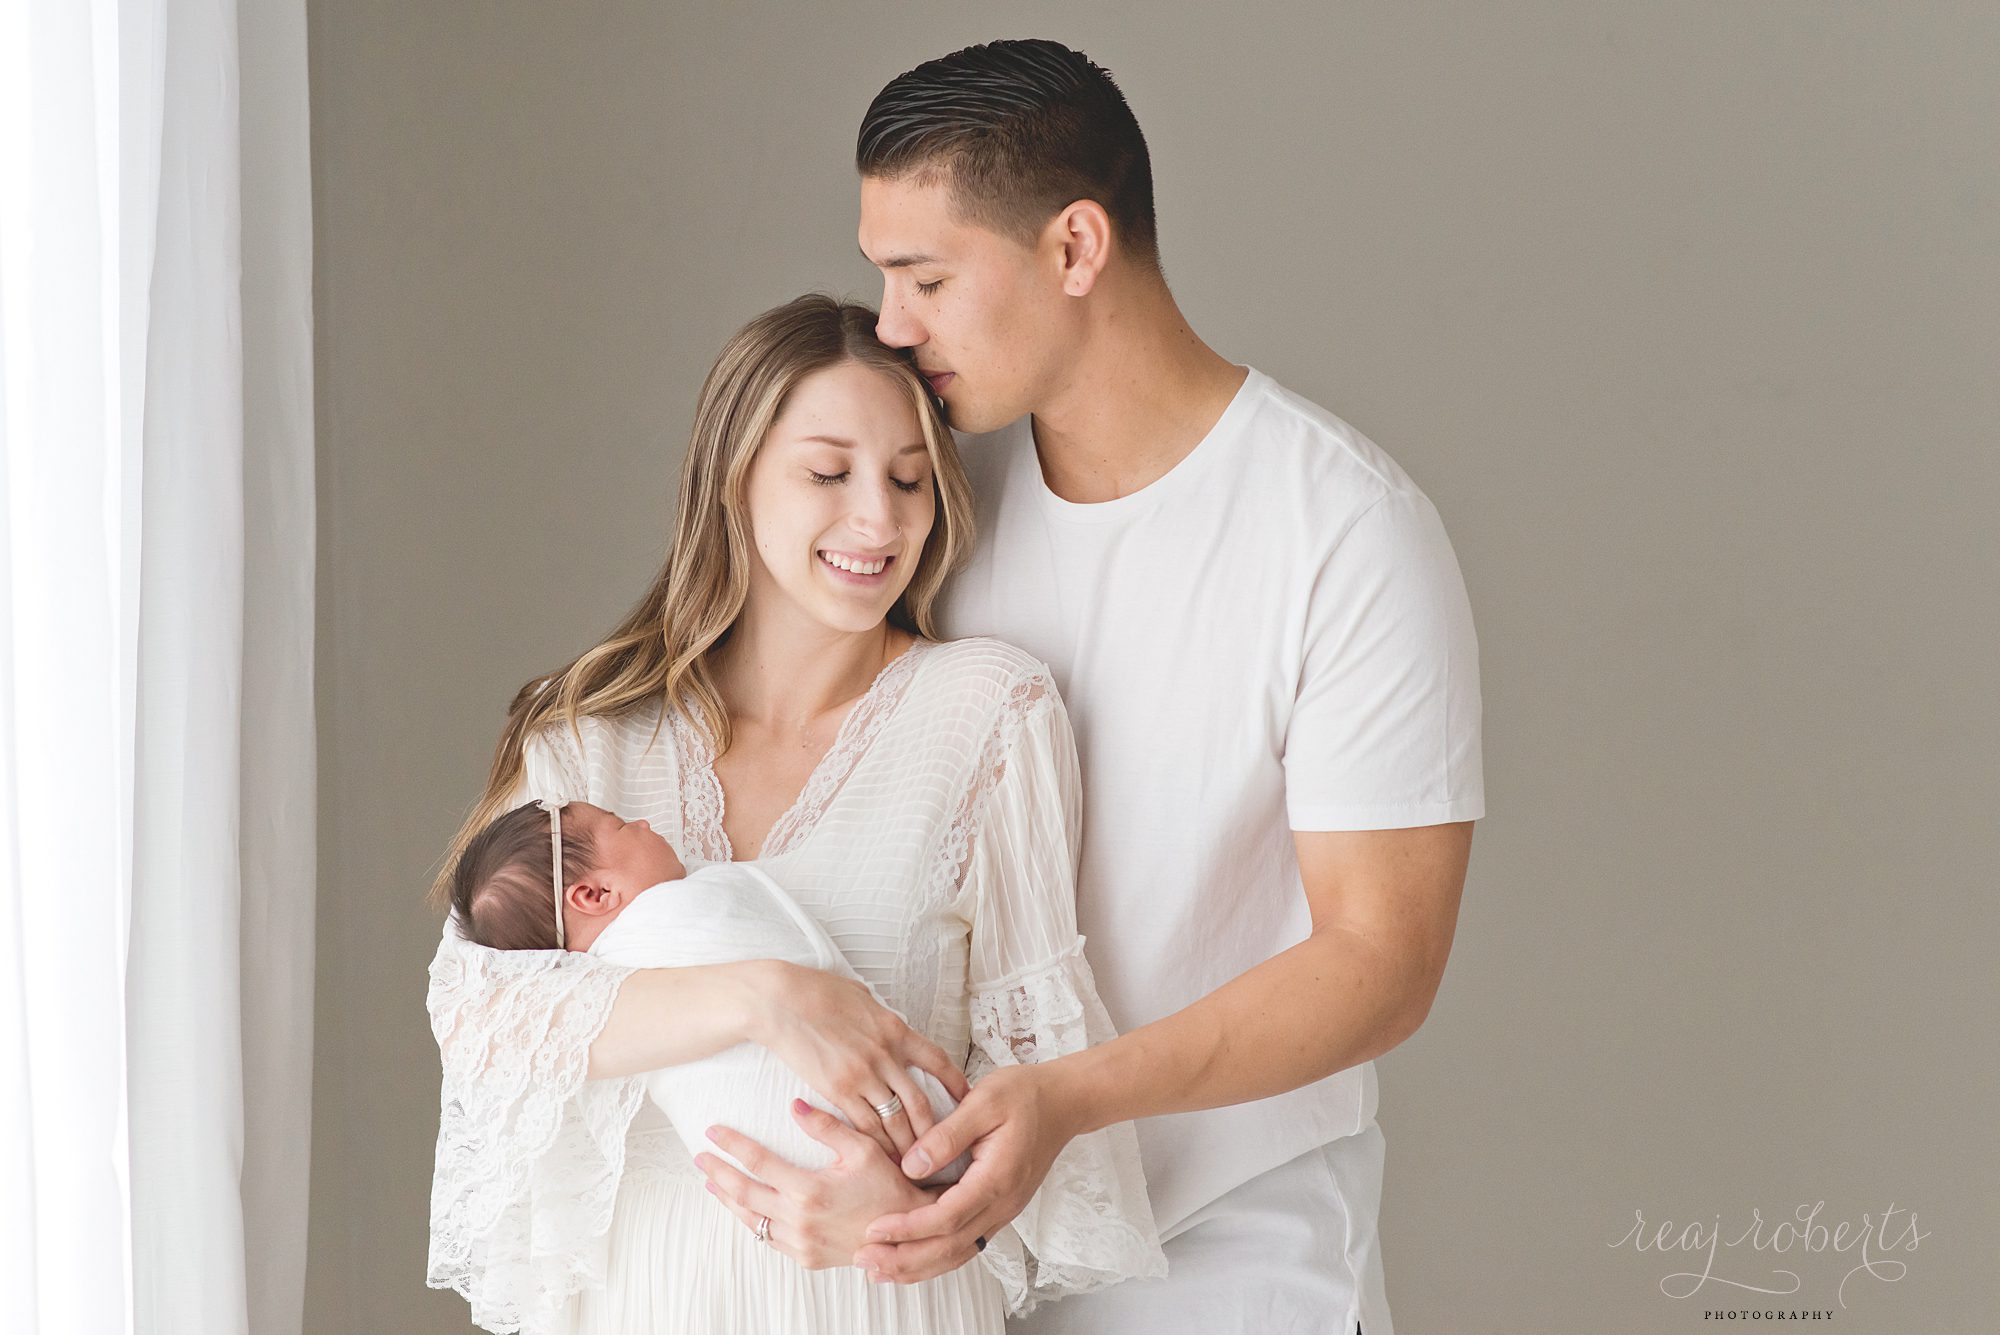 Phoenix Baby Photographer | Reaj Roberts Photography | newborn parent pose